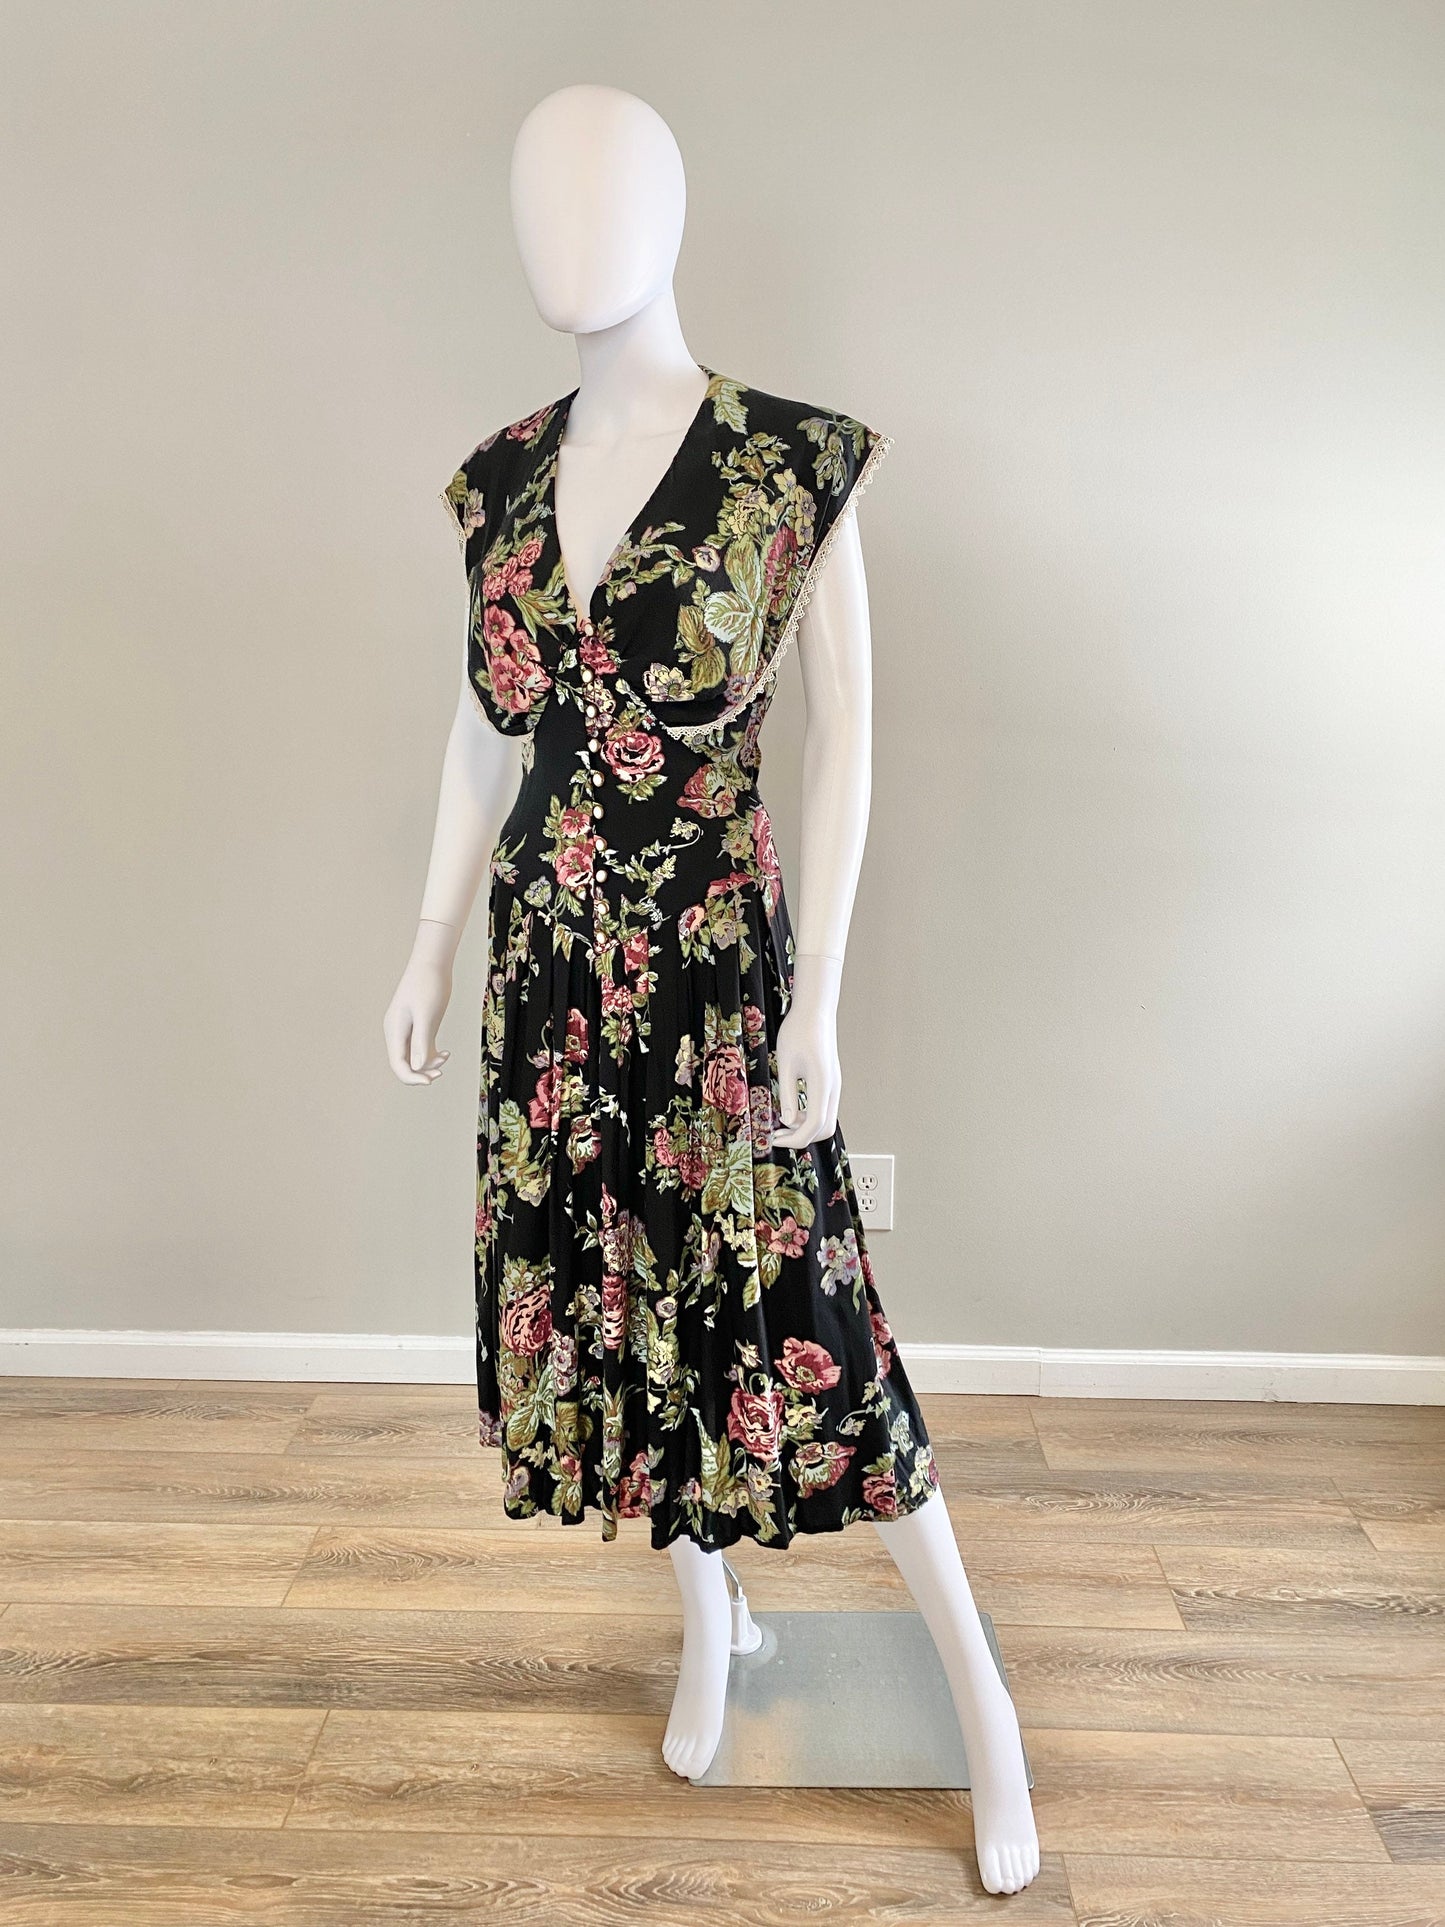 Vintage 1990s Black Floral Rayon Sundress / 90s does 1940s dress / Size S M